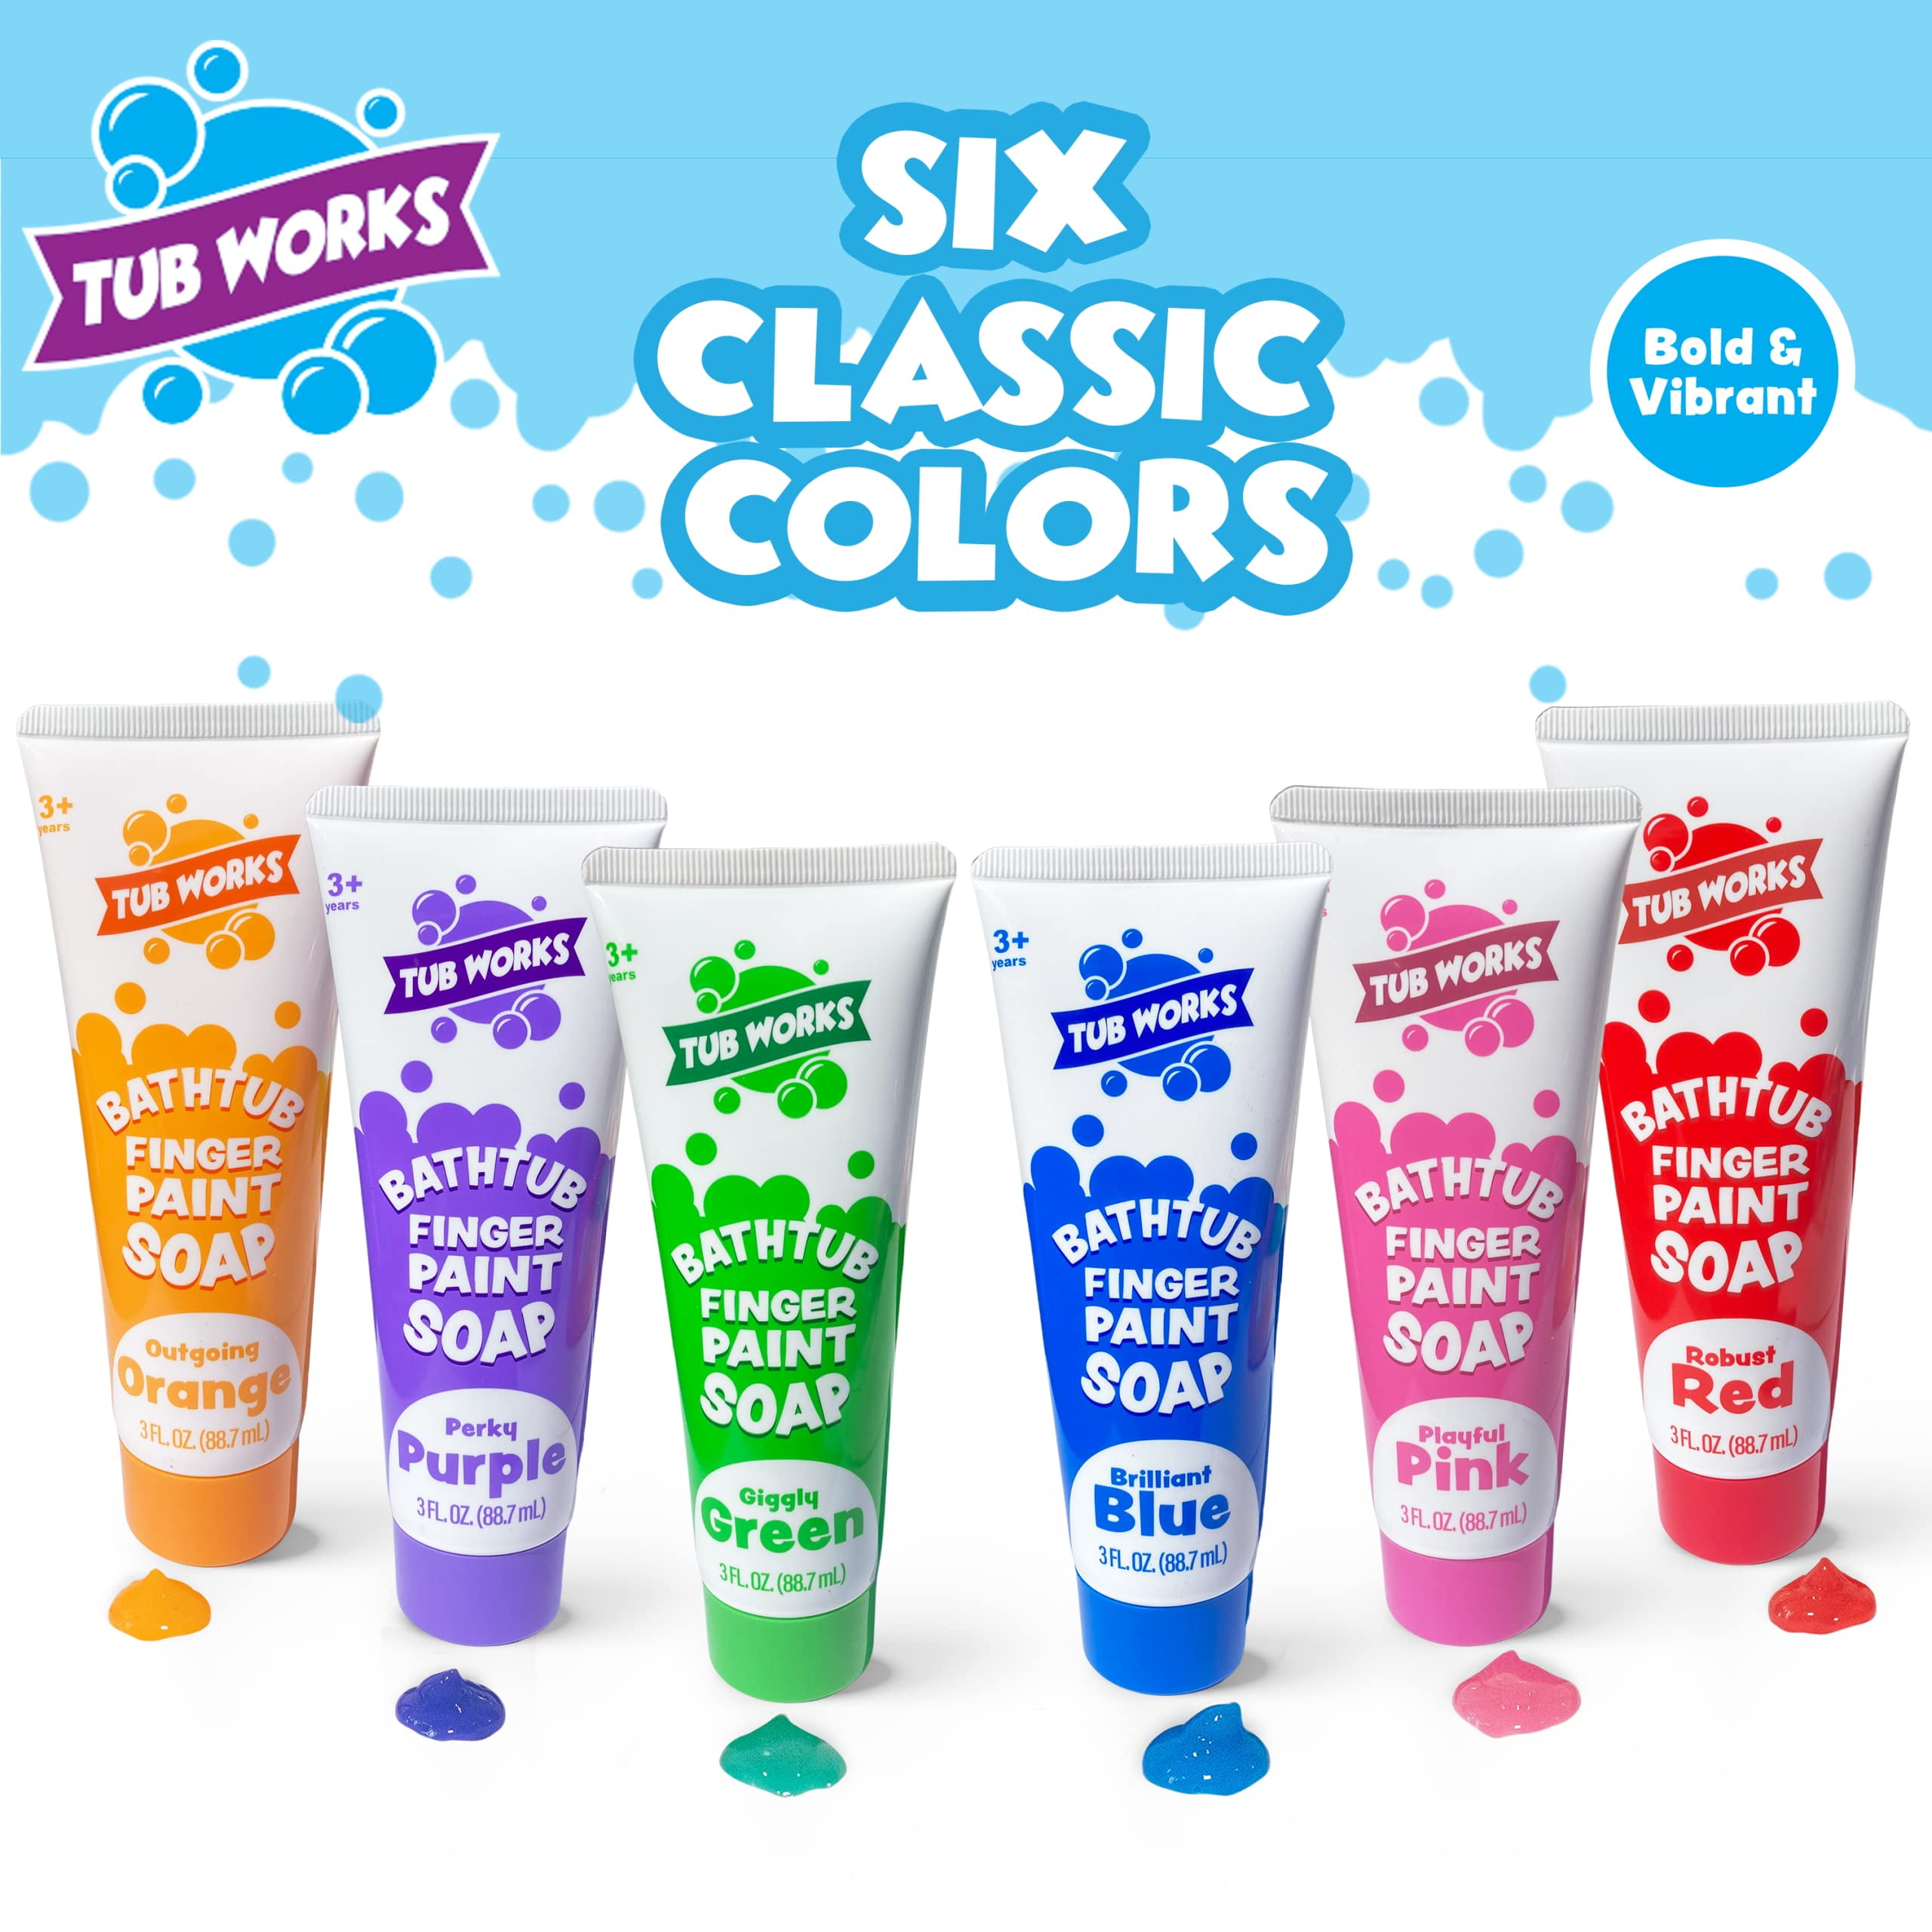 Crayola Neon Blue Bathtub Finger Paint Soap, 3 Oz.